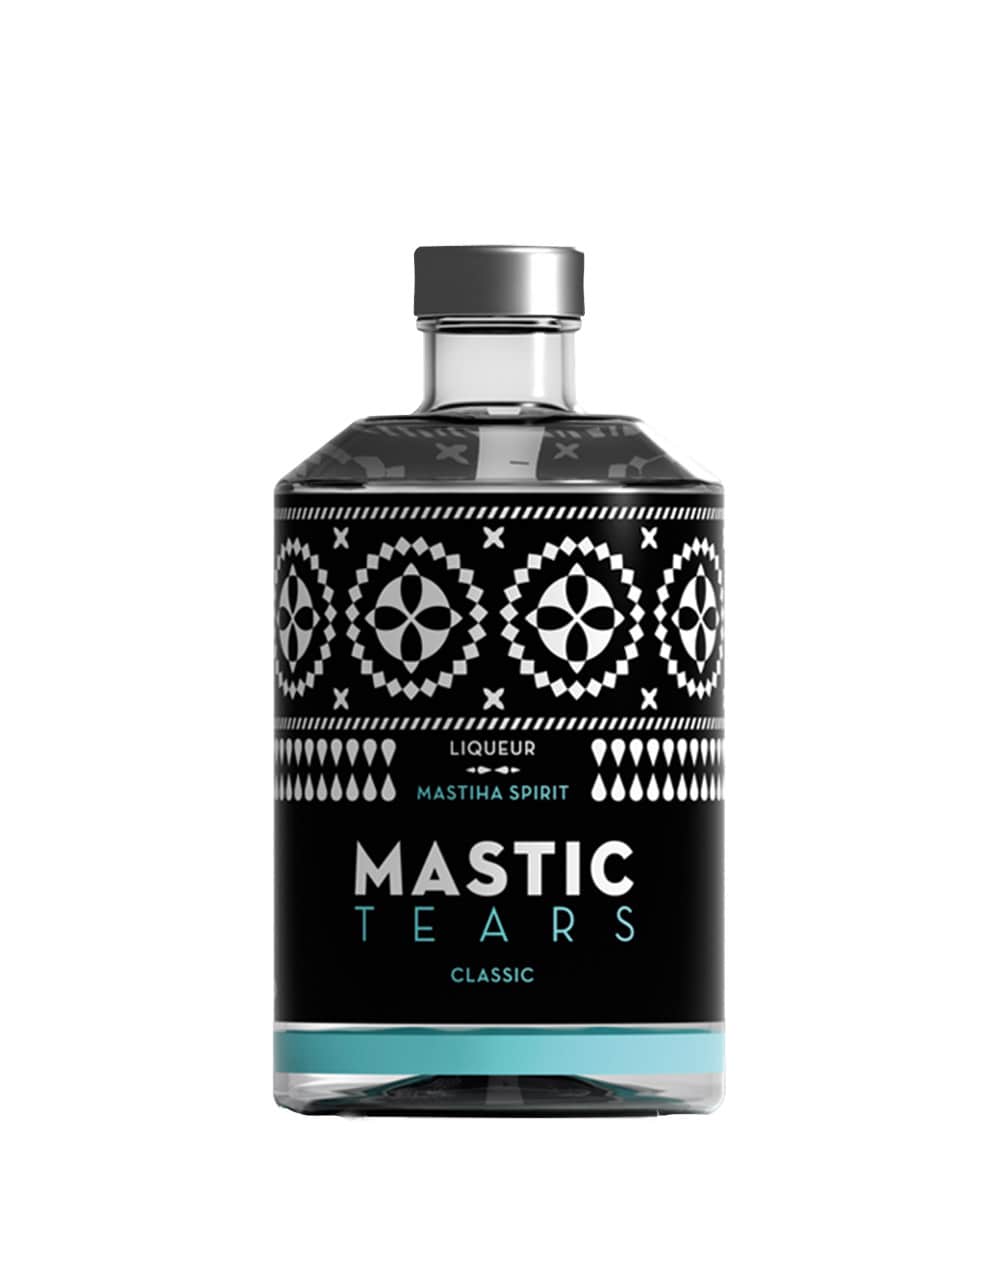 Mastic Tears Classic Mastiha Spirit Liqueur